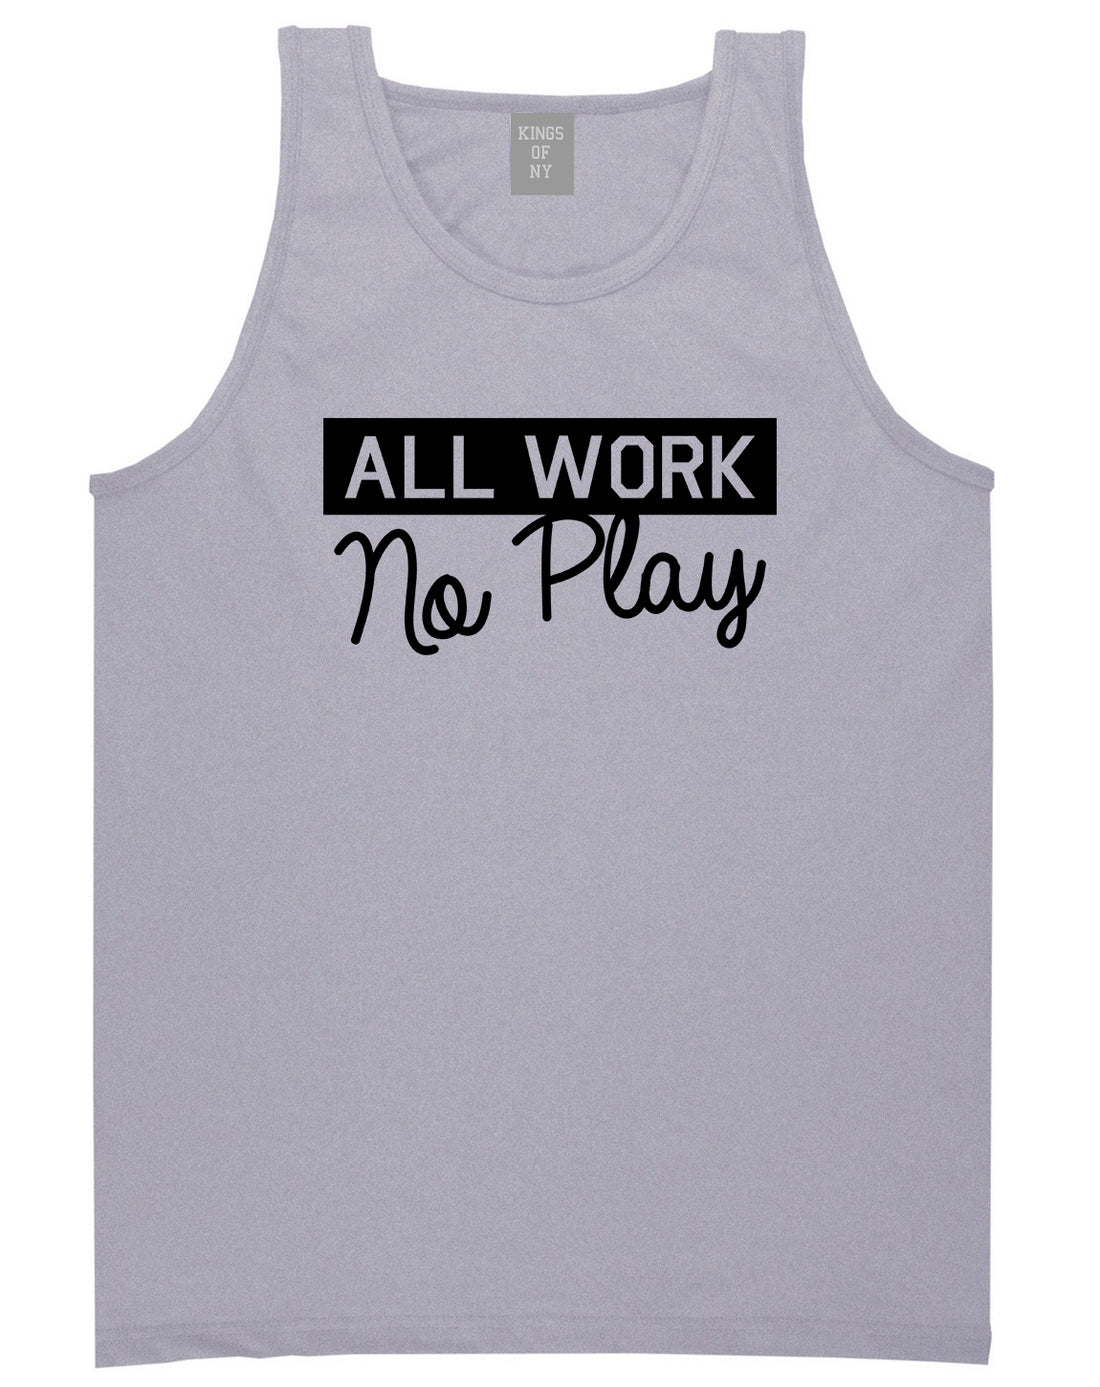 All Work No Play Mens Tank Top T-Shirt Grey